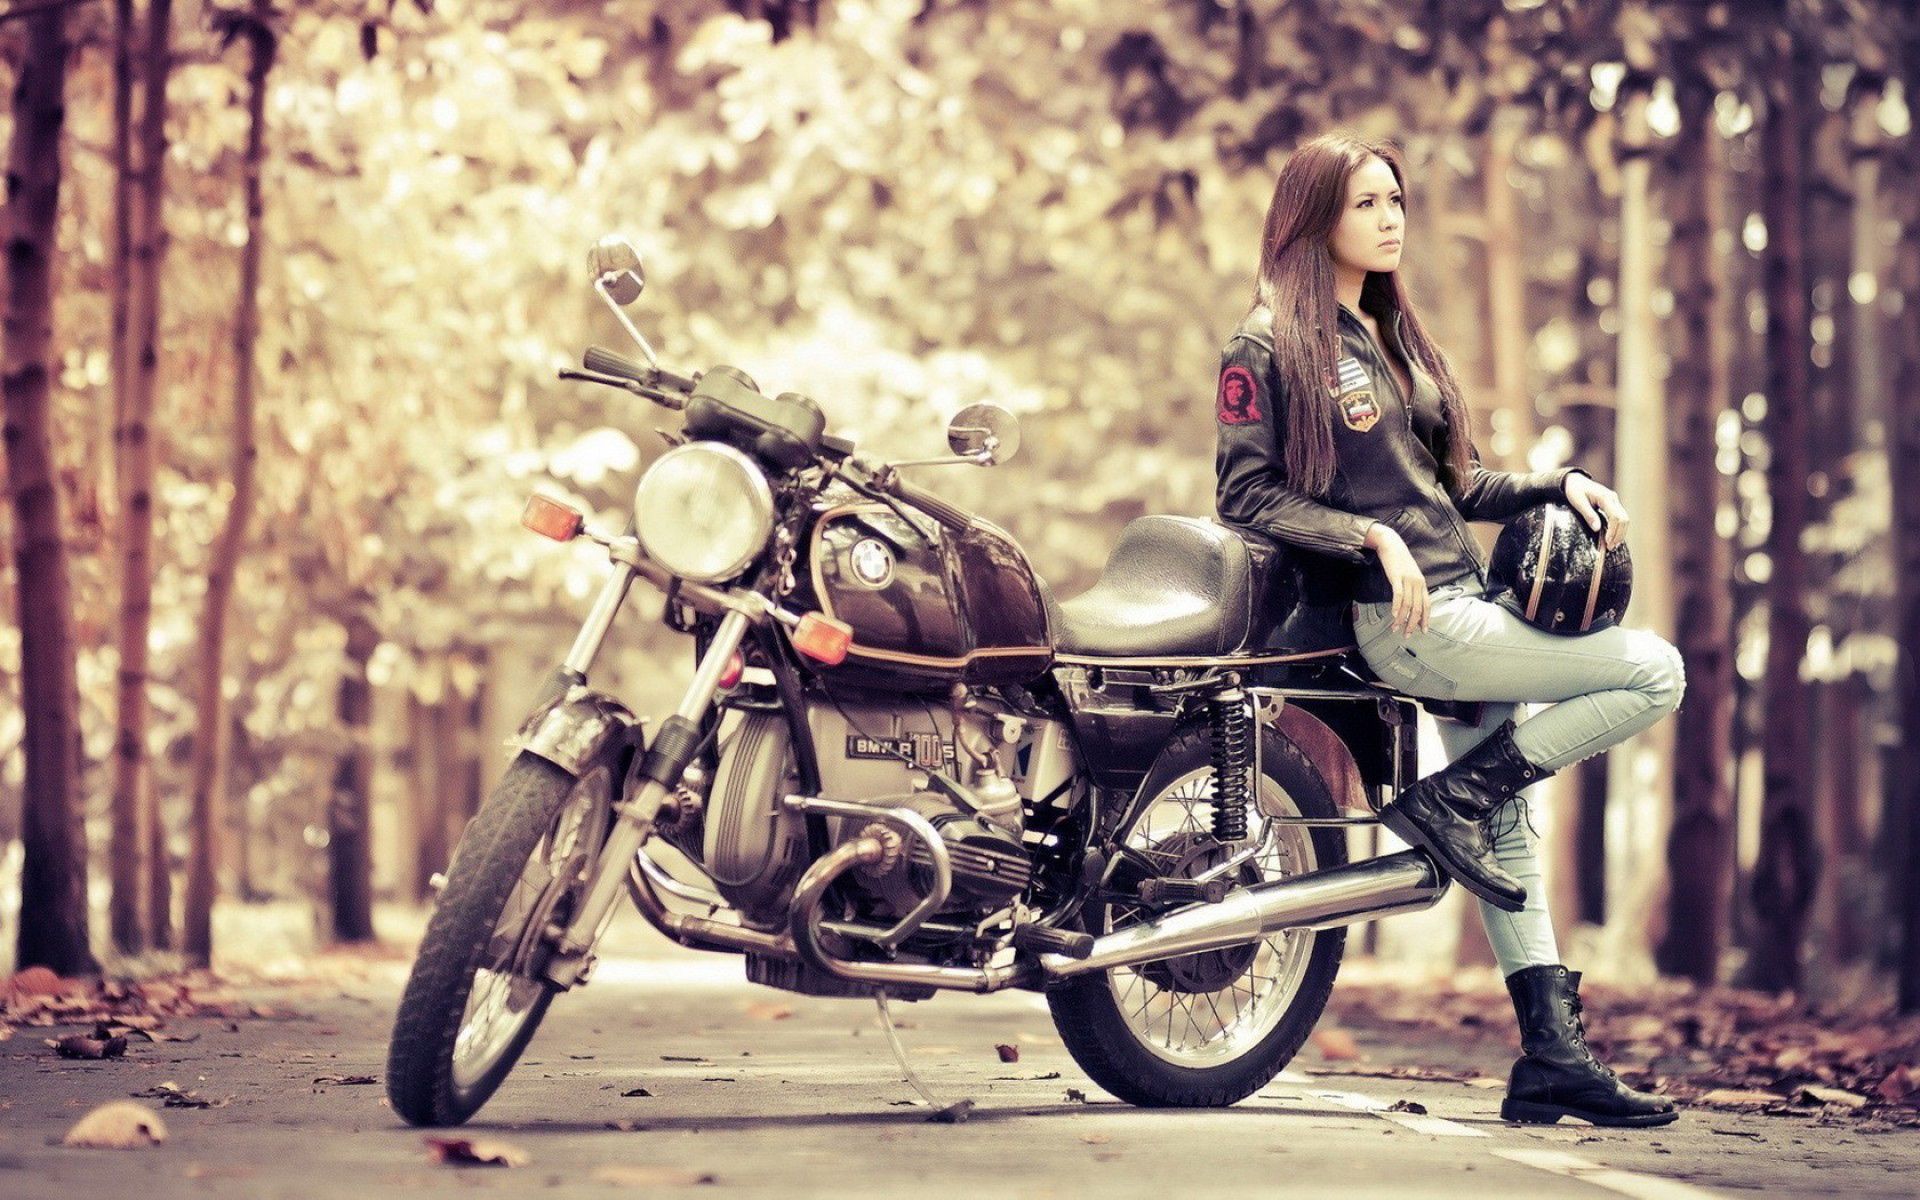 48+] Fondos de Girls on Motorcycles